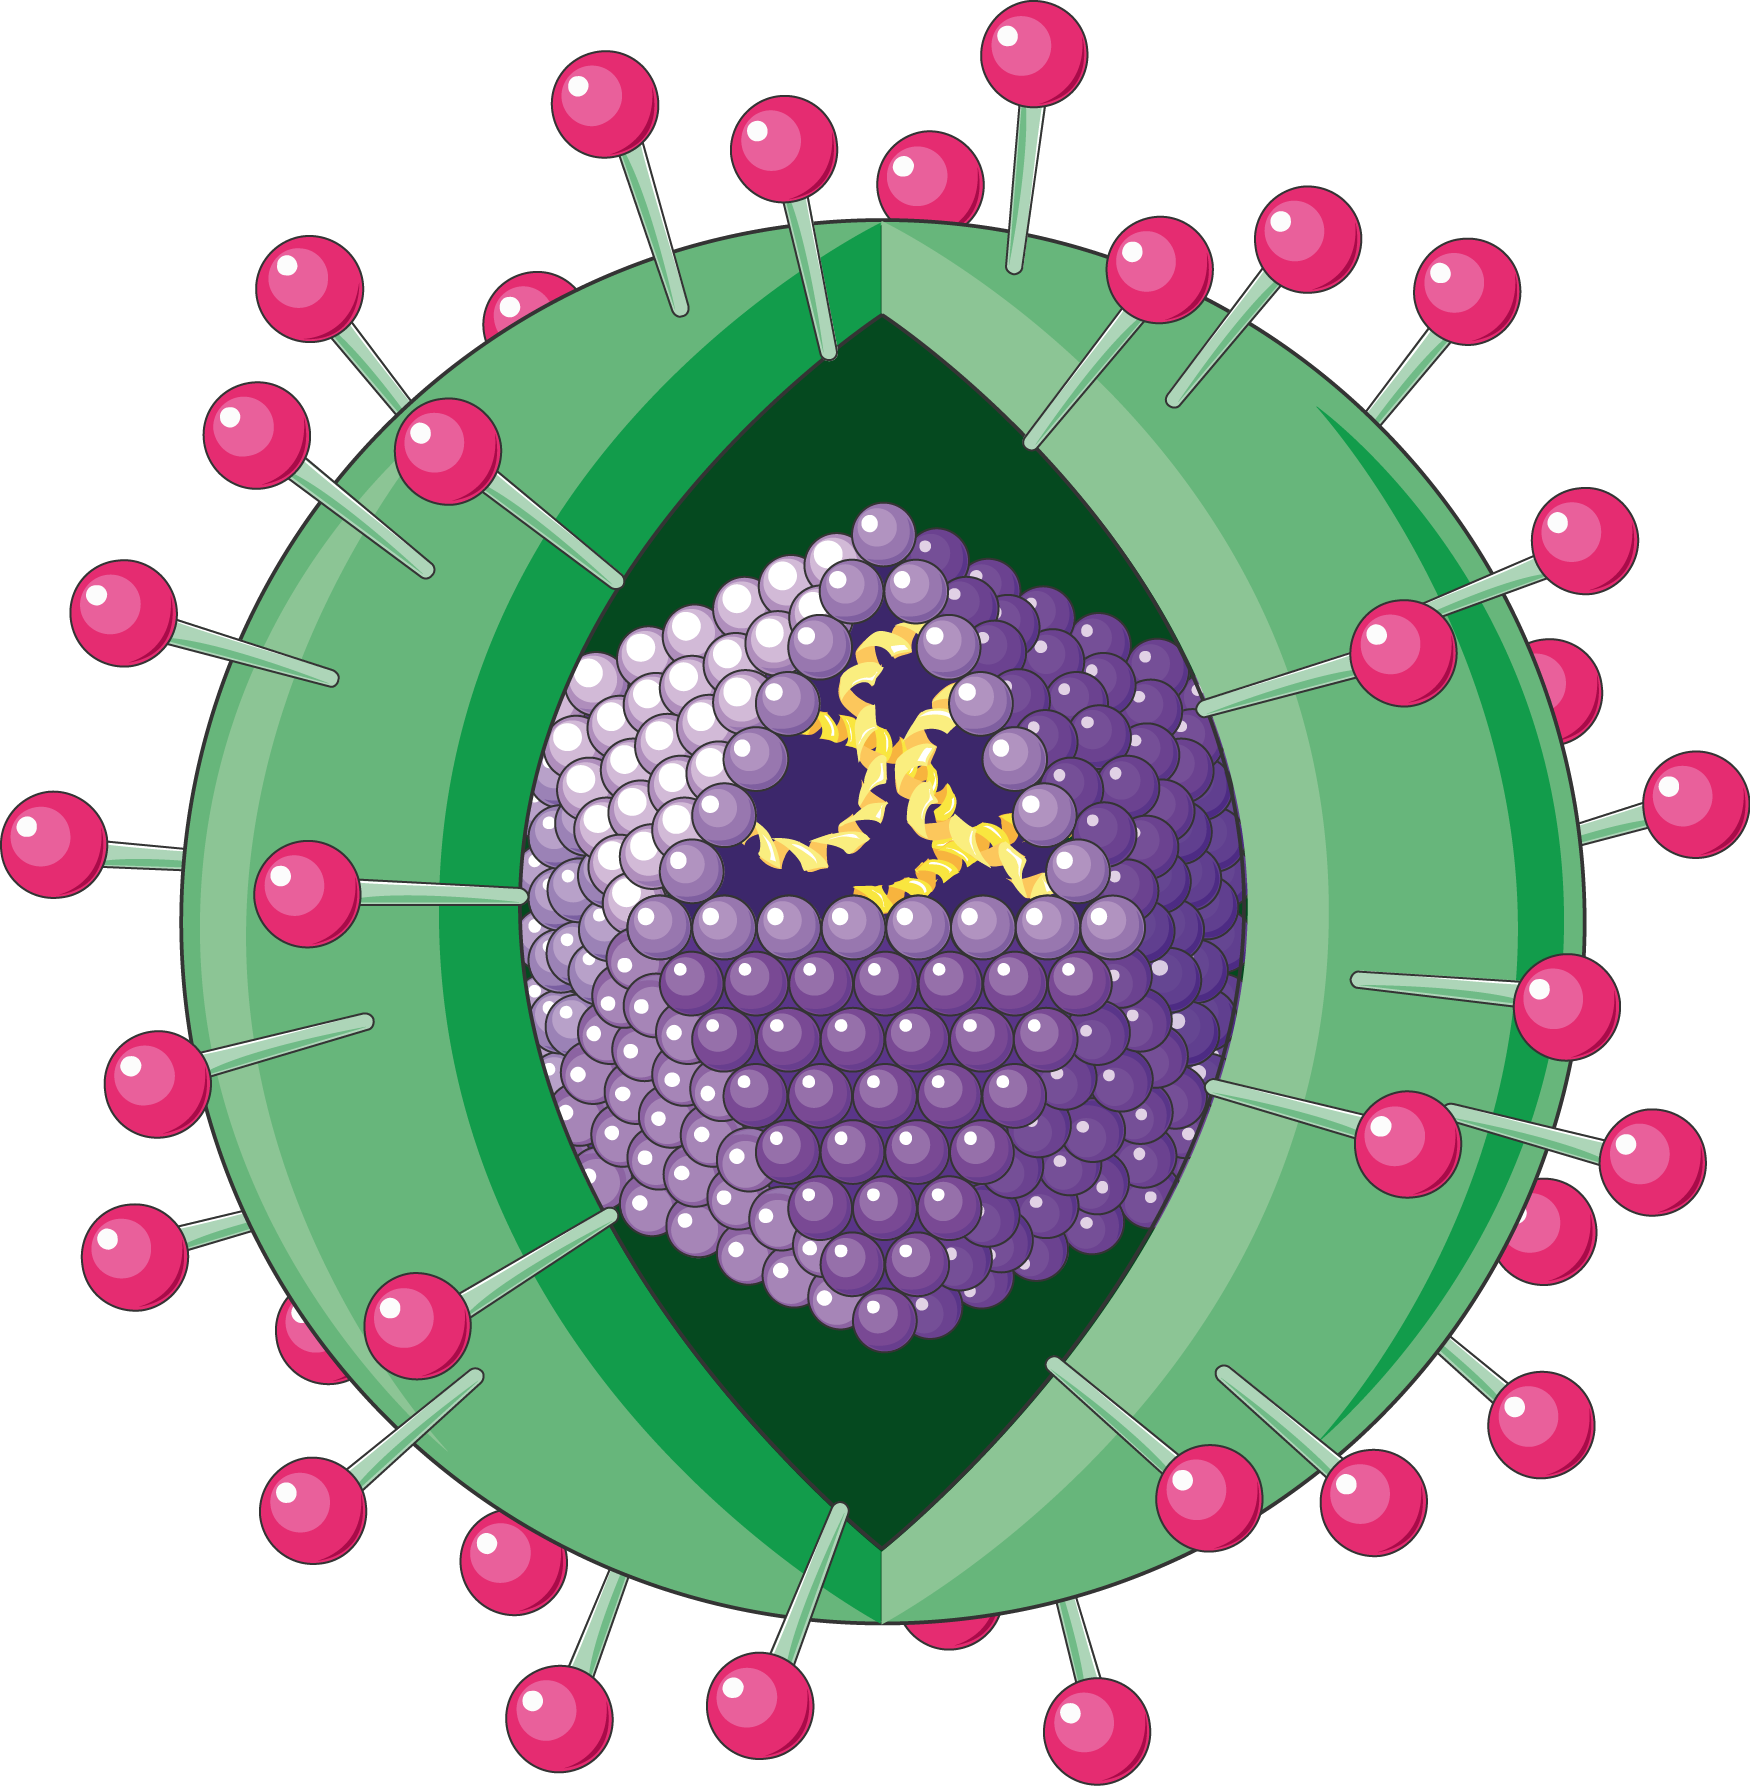 Download The Image - Hepatitis Virus Transparent (1750x1786)